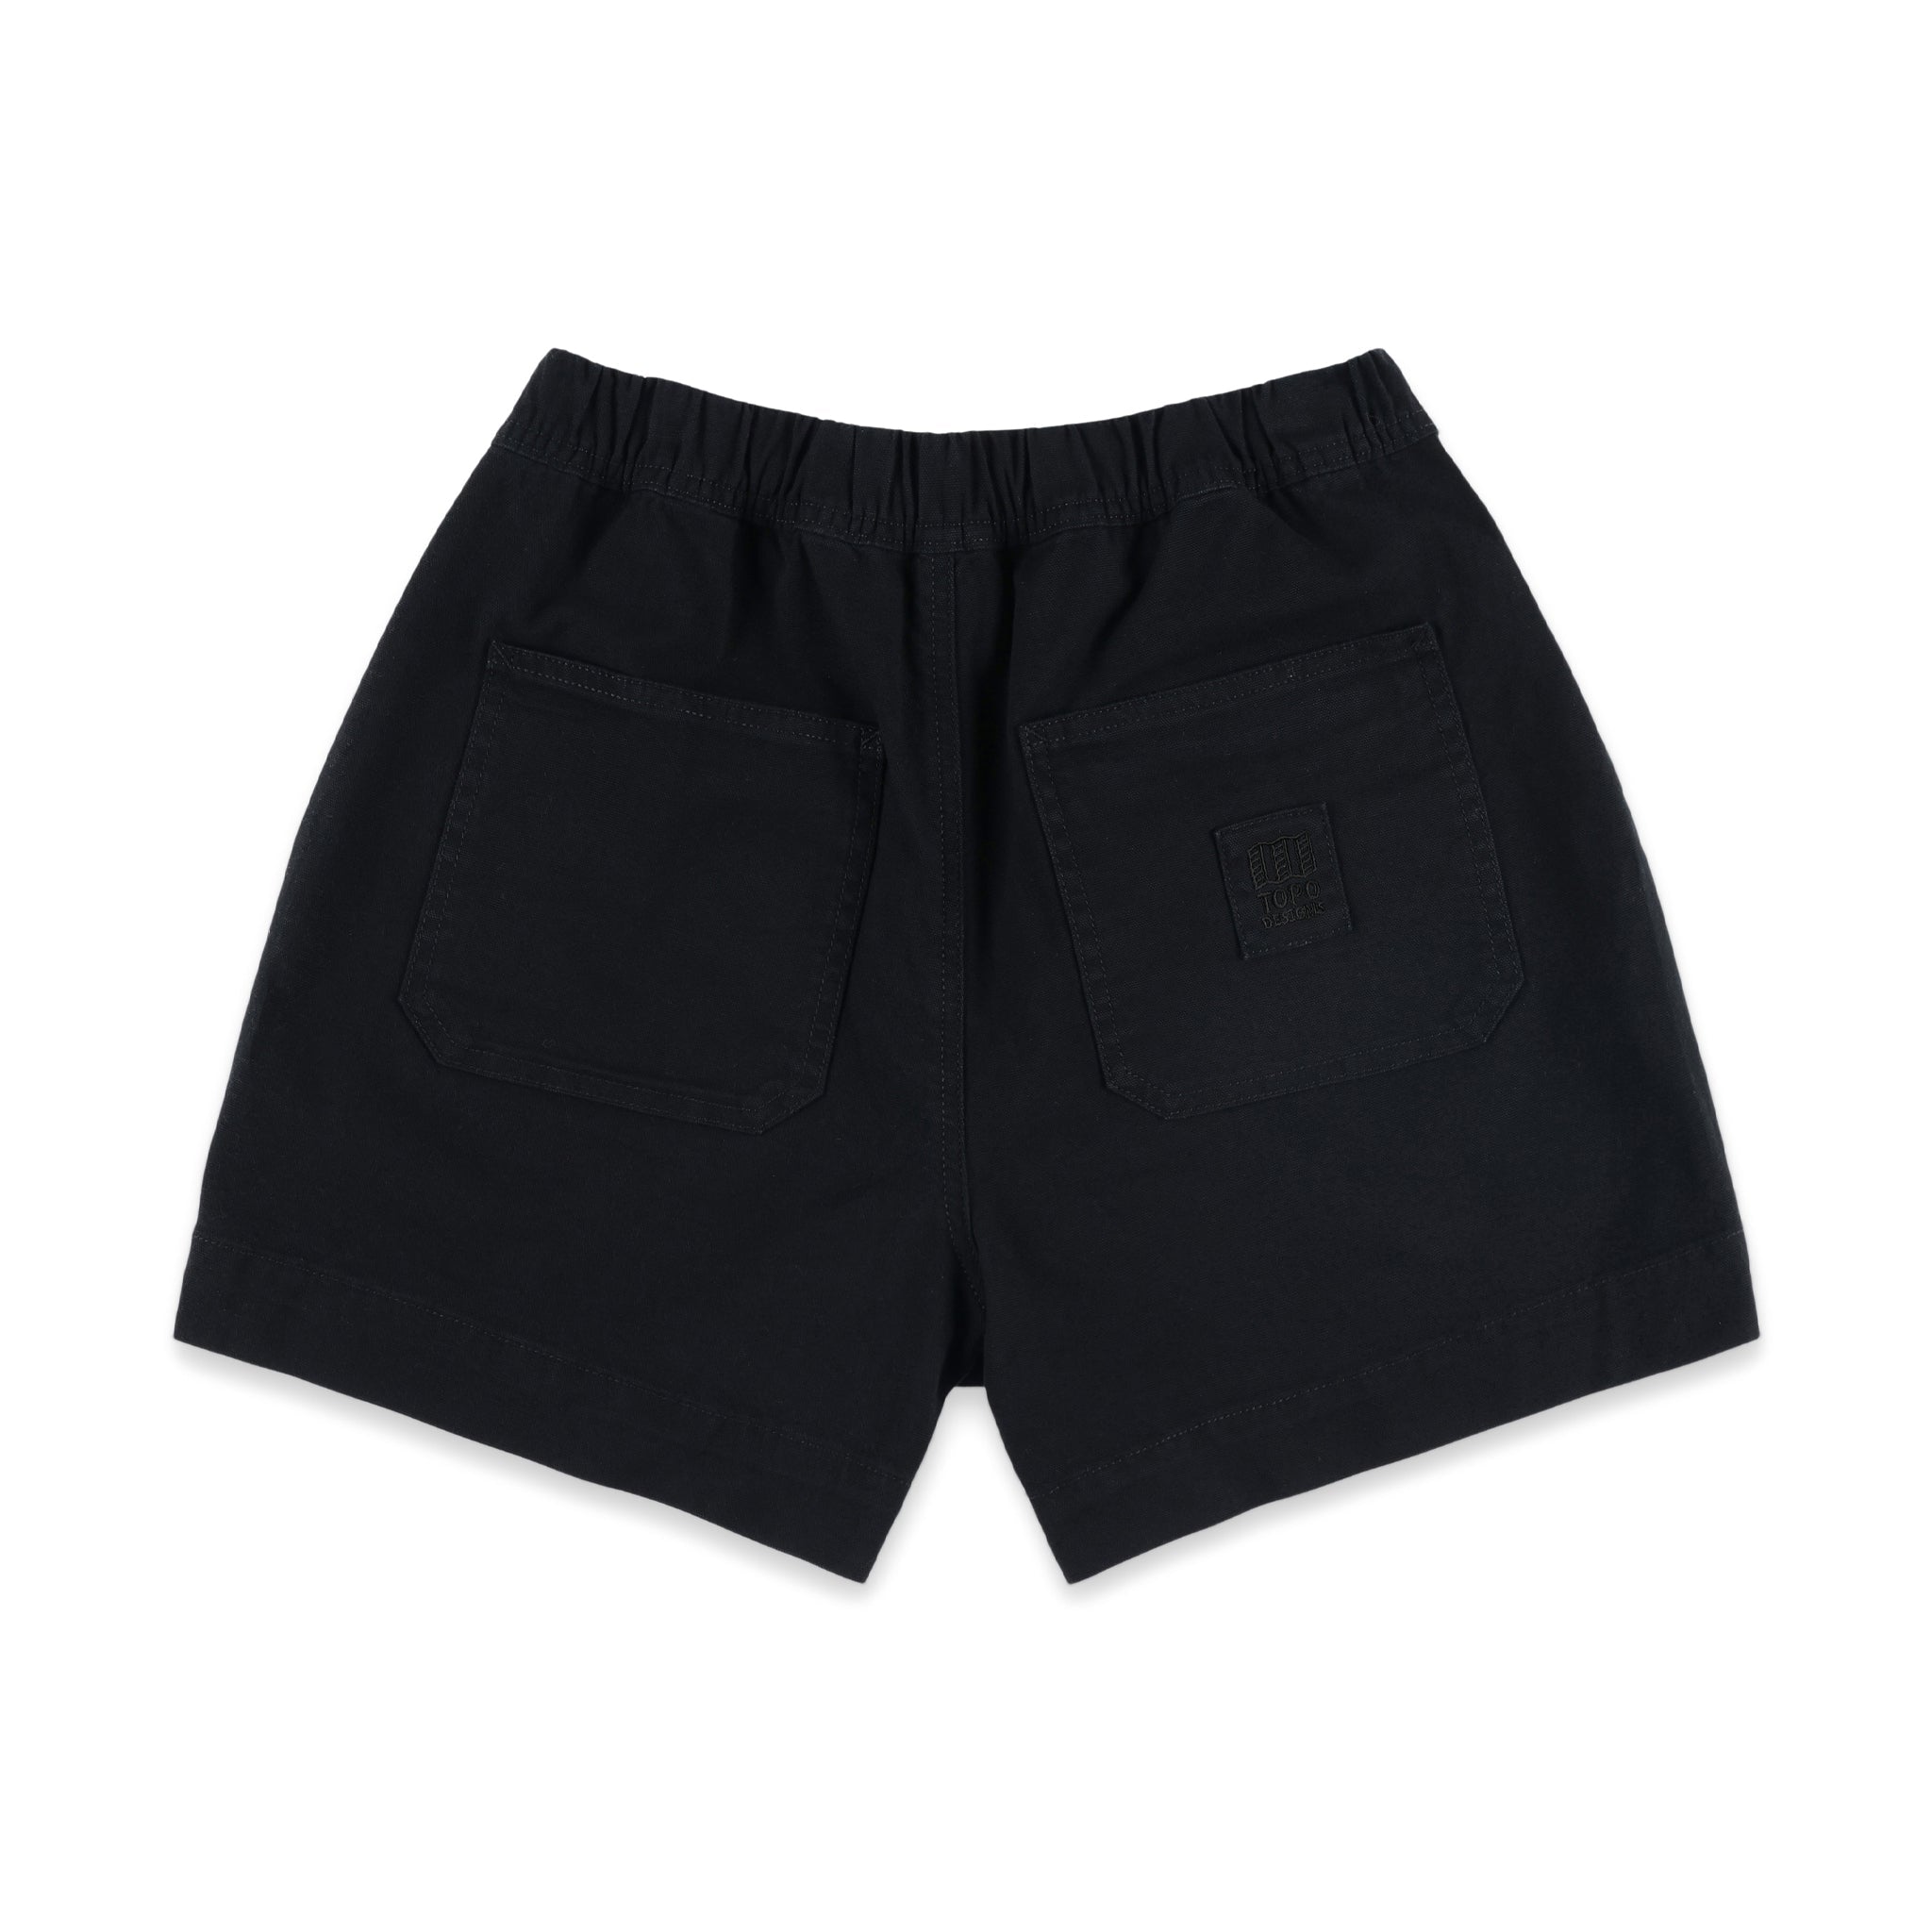 Back pockets on Topo Designs Women's drawstring Dirt Shorts in 100% organic cotton in "Black".